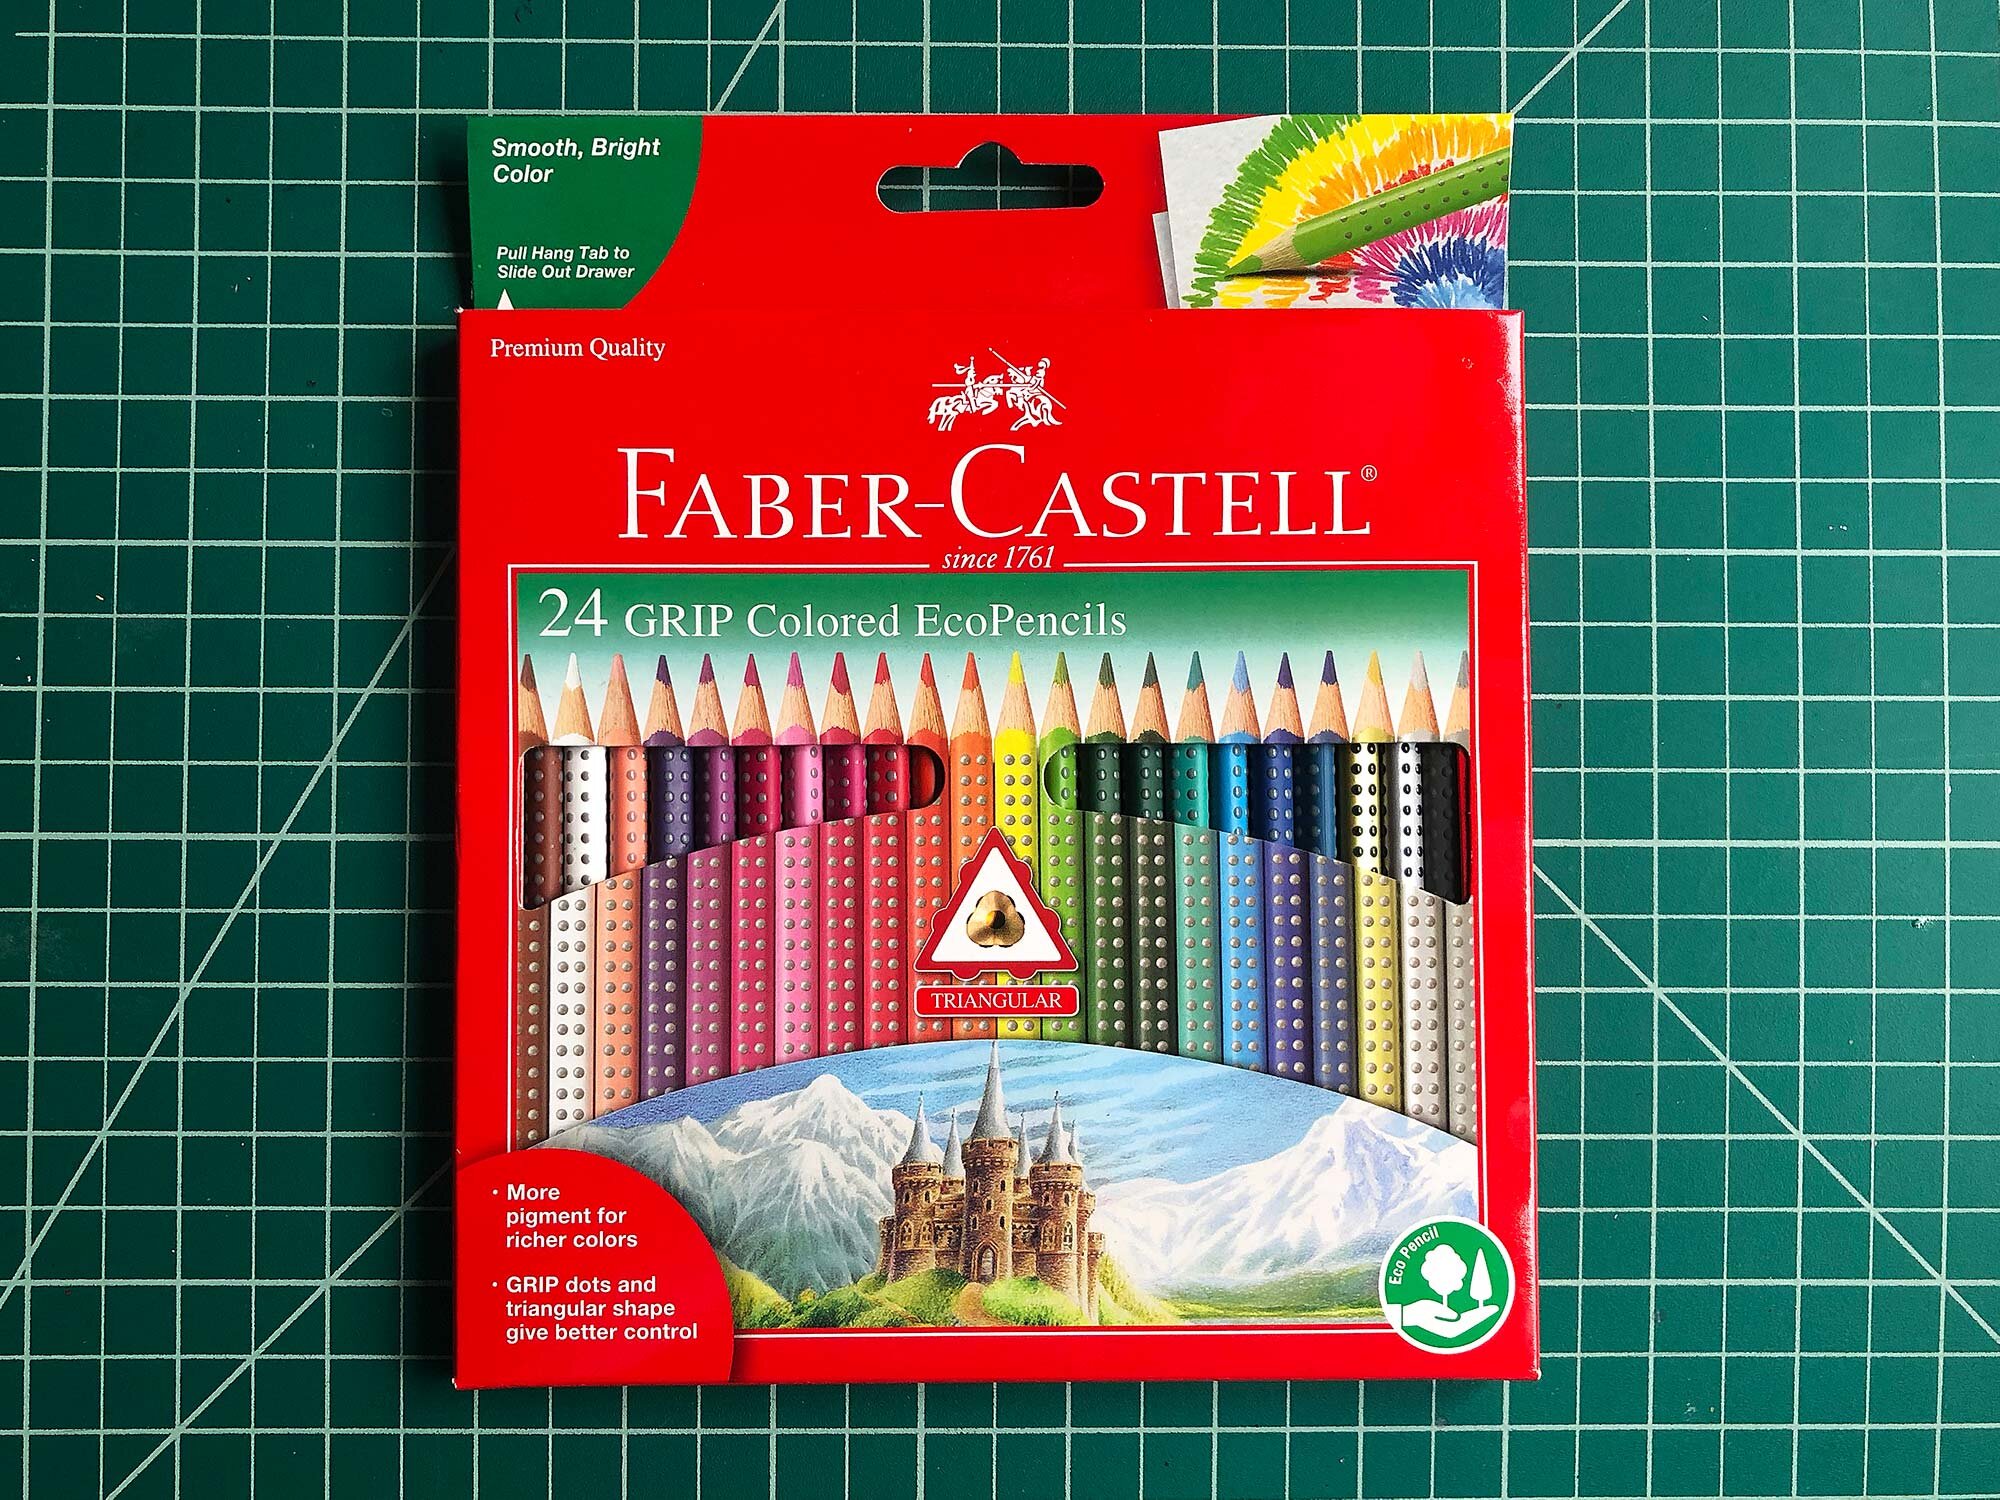 Faber-Castell GRIP Ecopencils